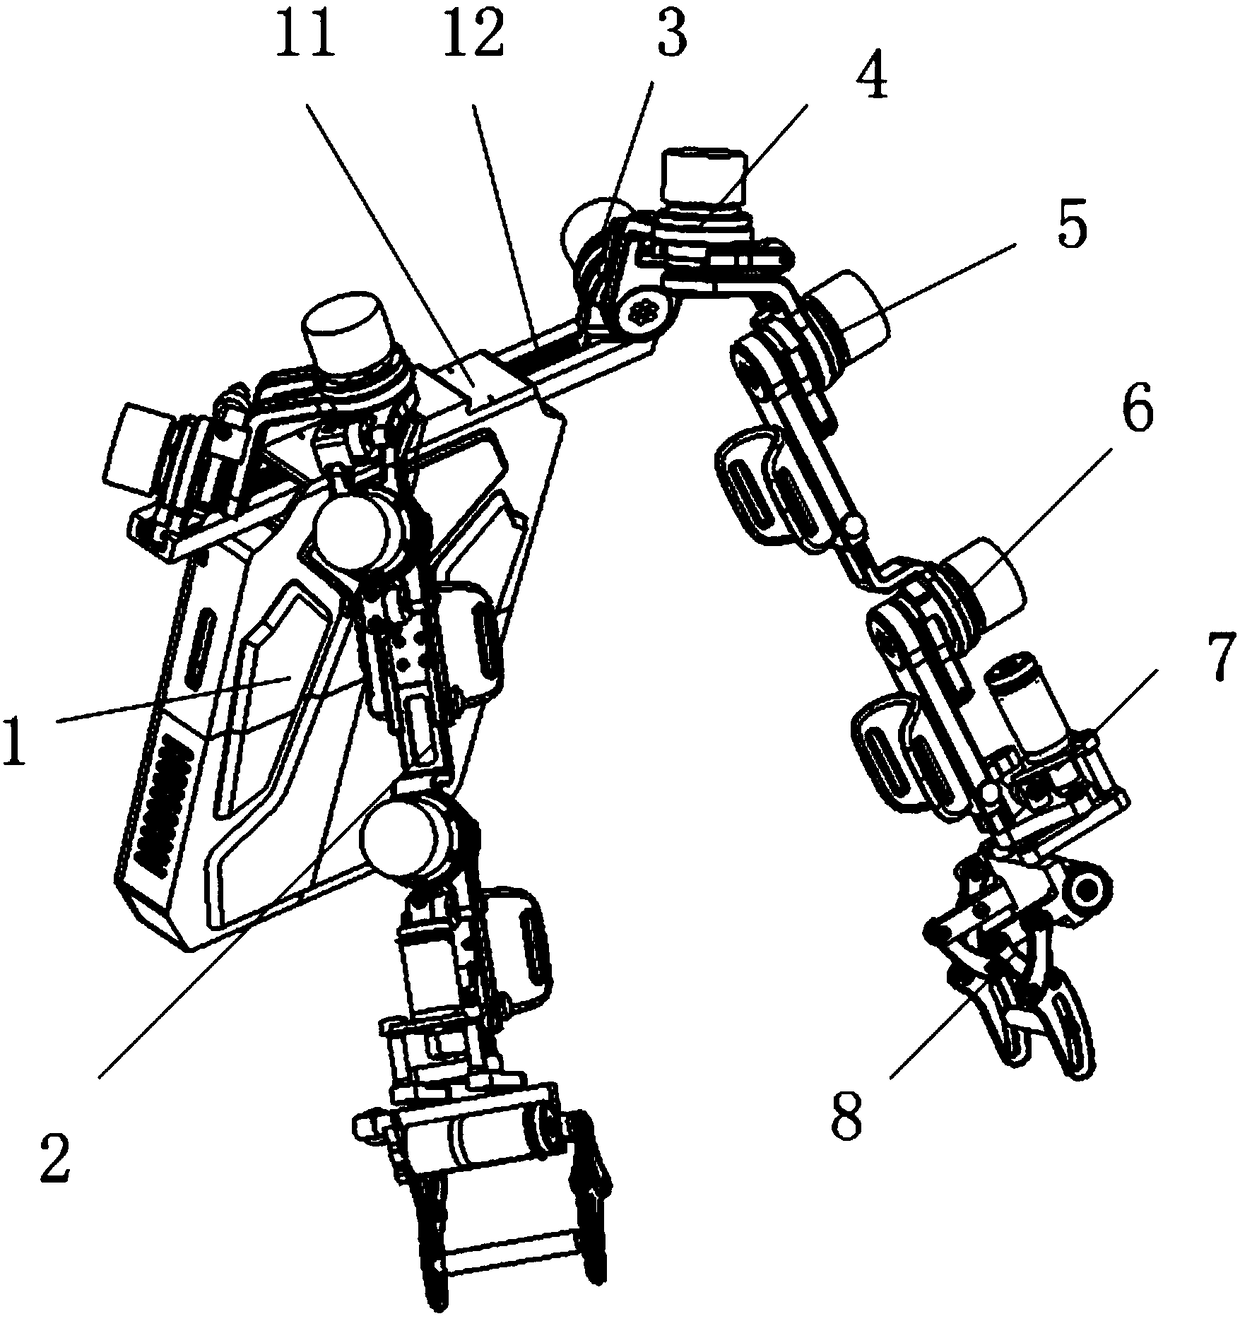 Rehabilitation mechanical arm and rehabilitation robot